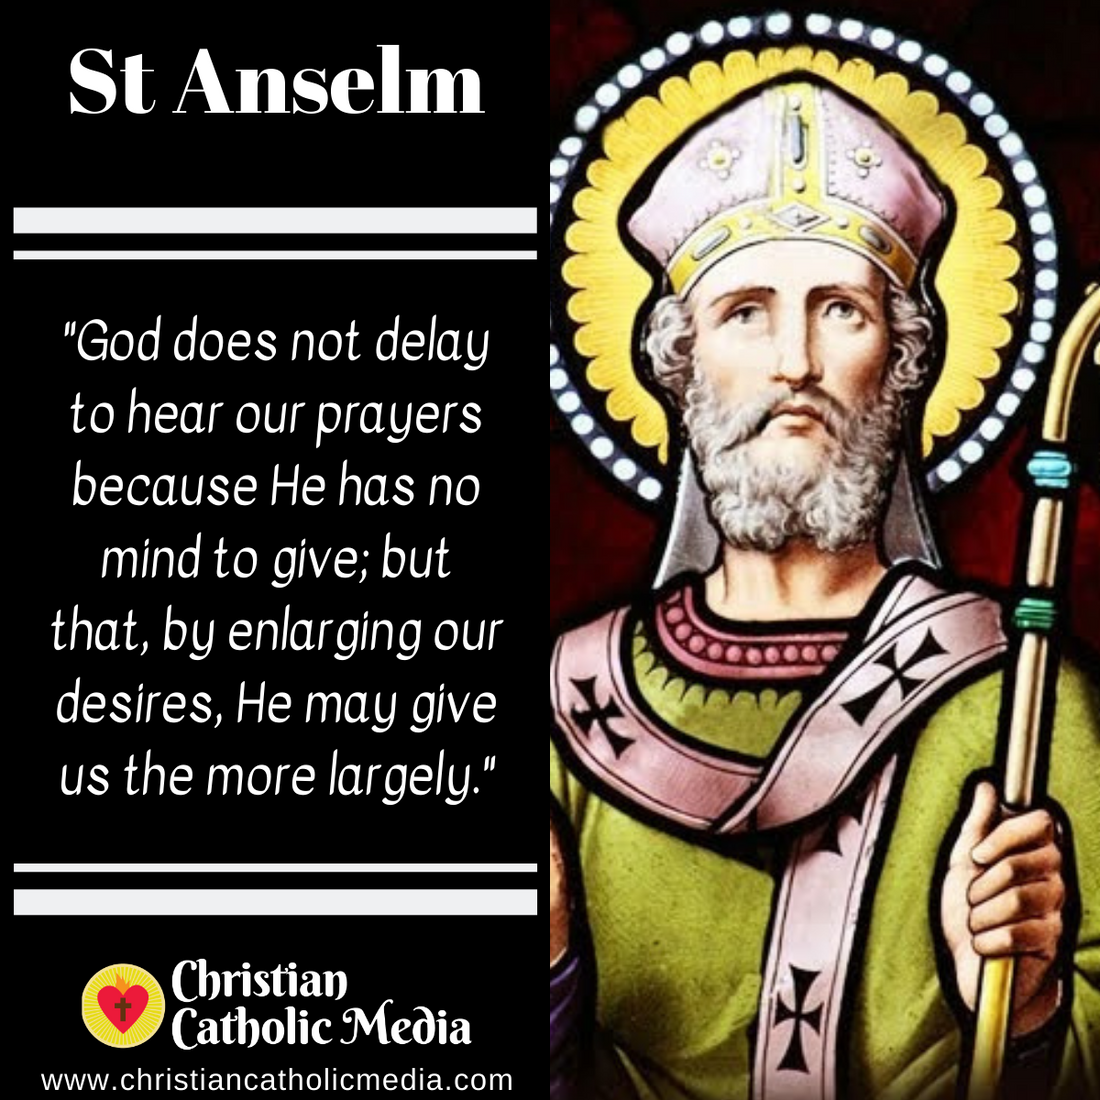 St Anselm - Wednesday April 21, 2021